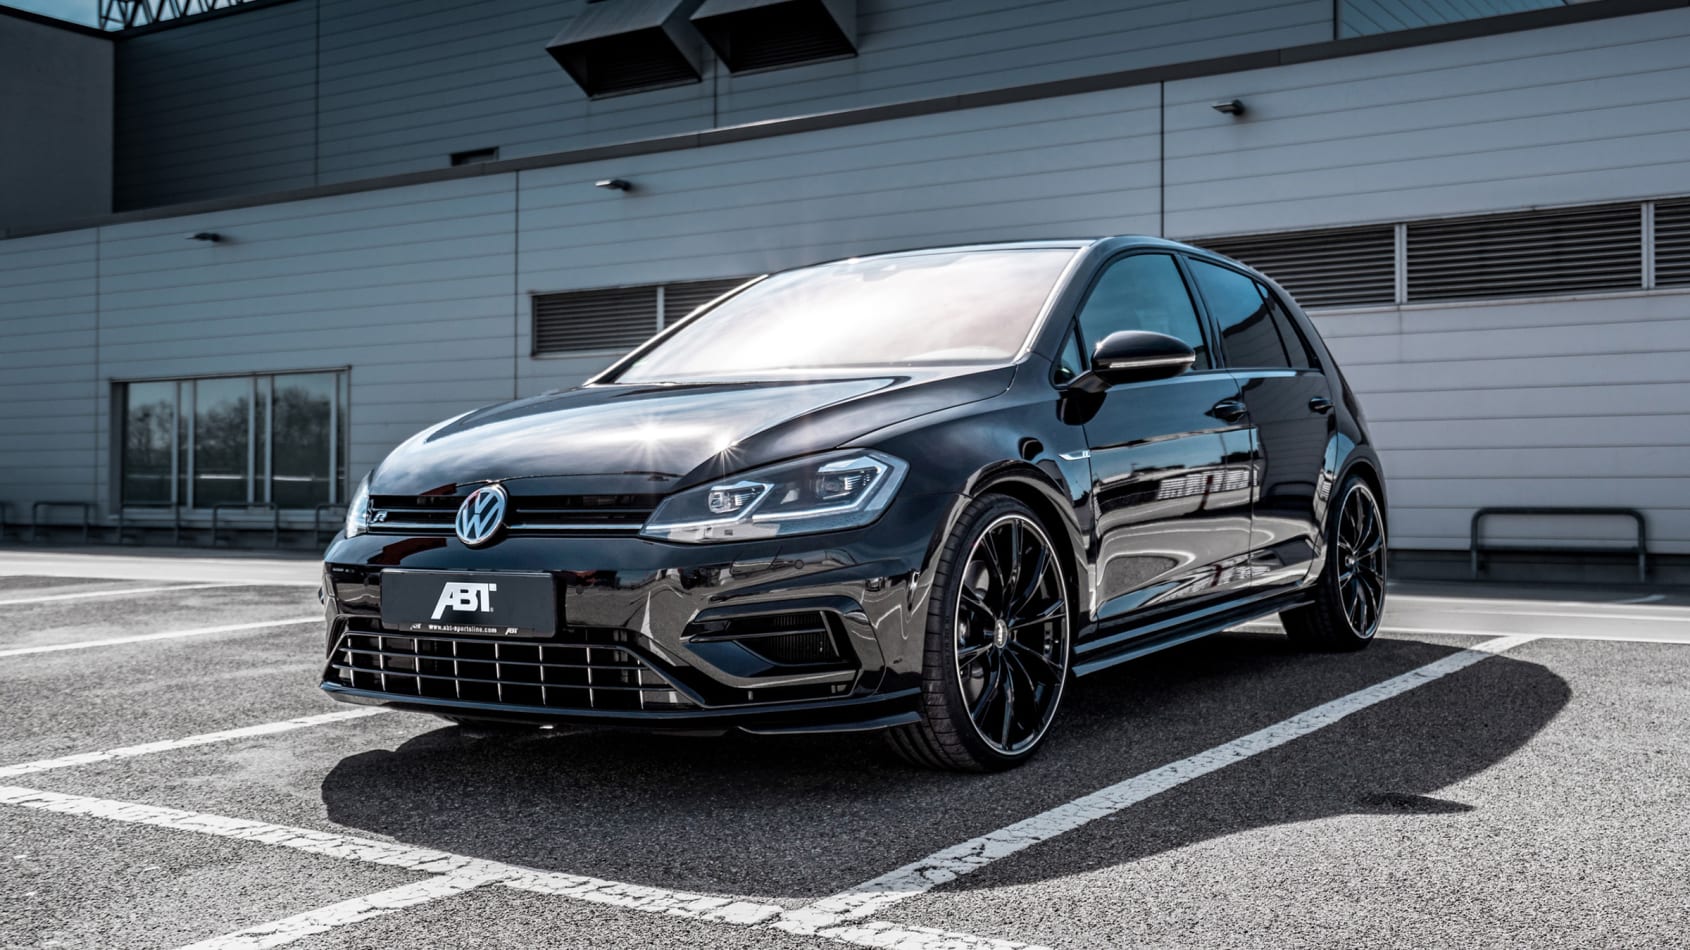 Volkswagen ABT Golf R DSG | Win A Car